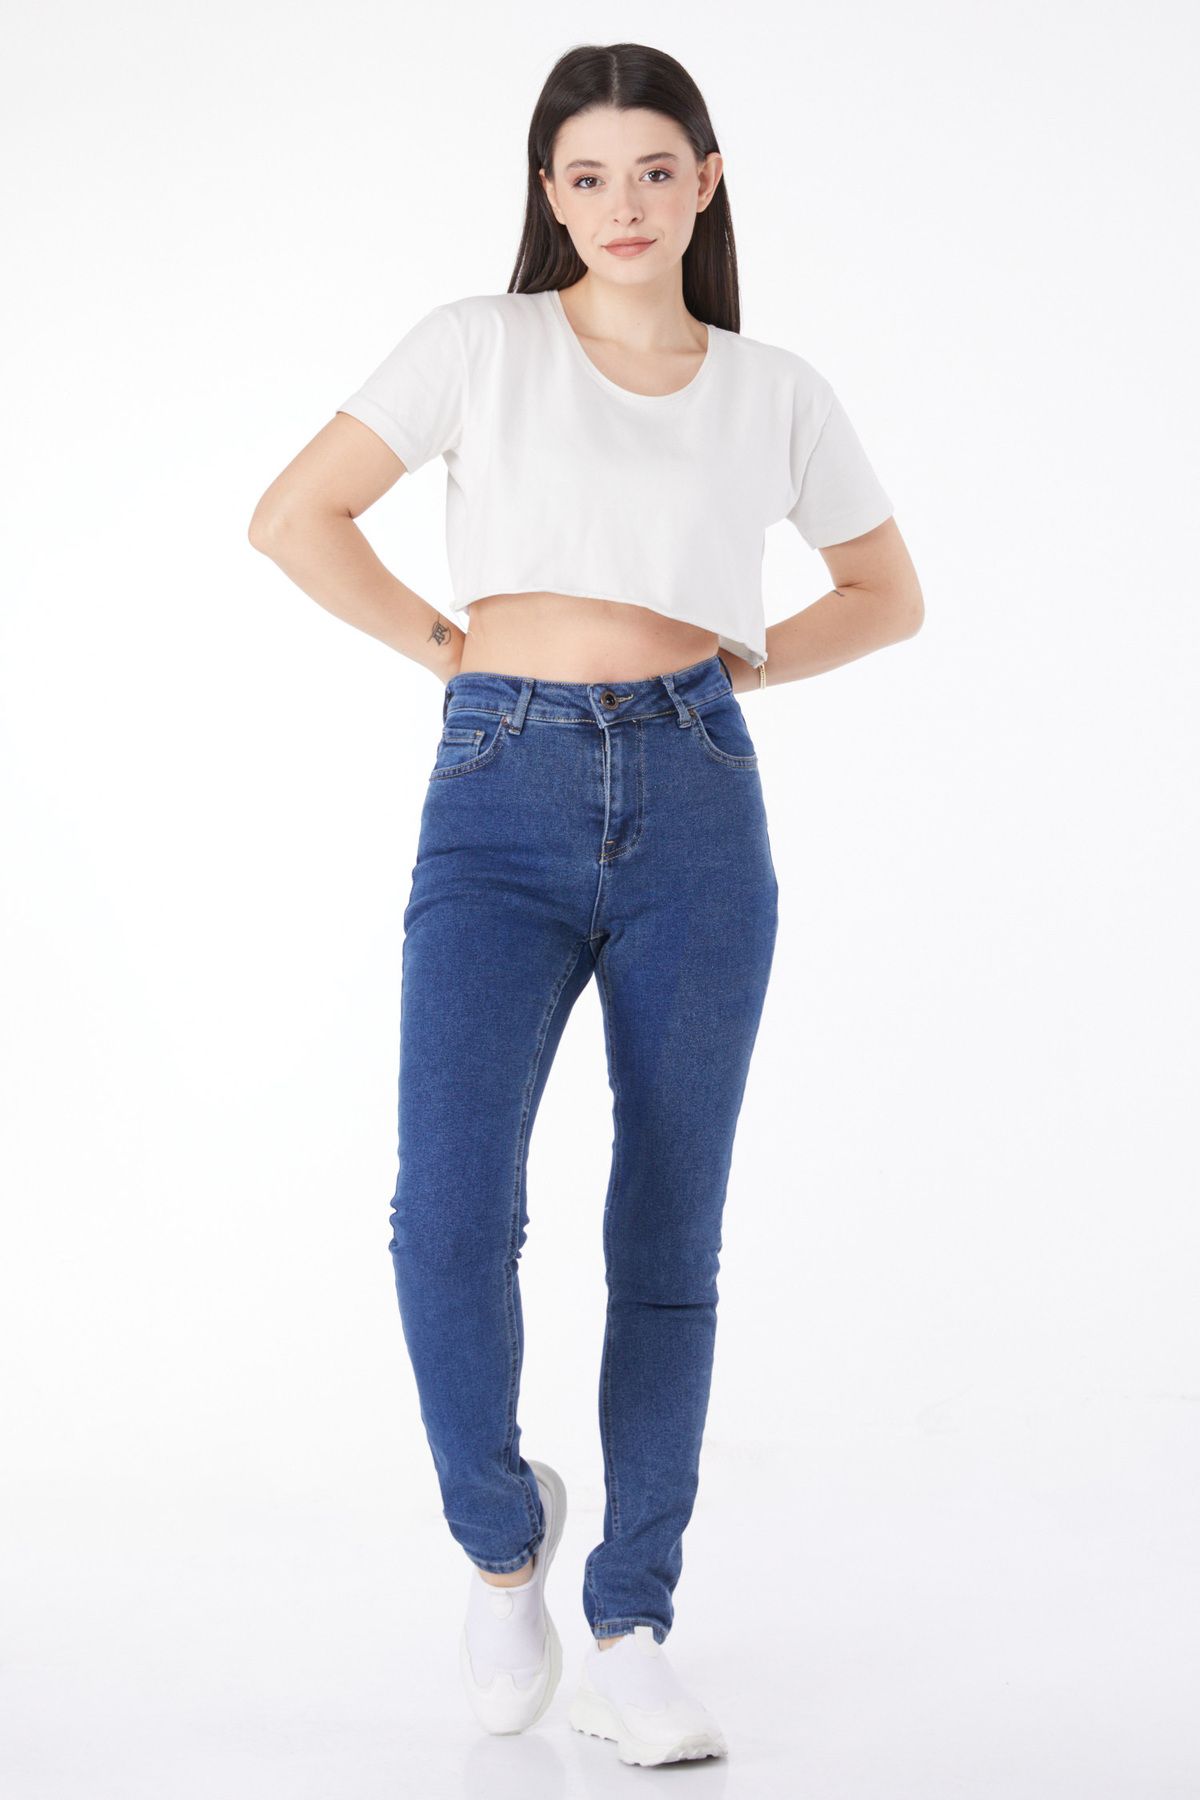 TOFİSA Düz Orta Kadın Mavi Kot Pantolon - 25062